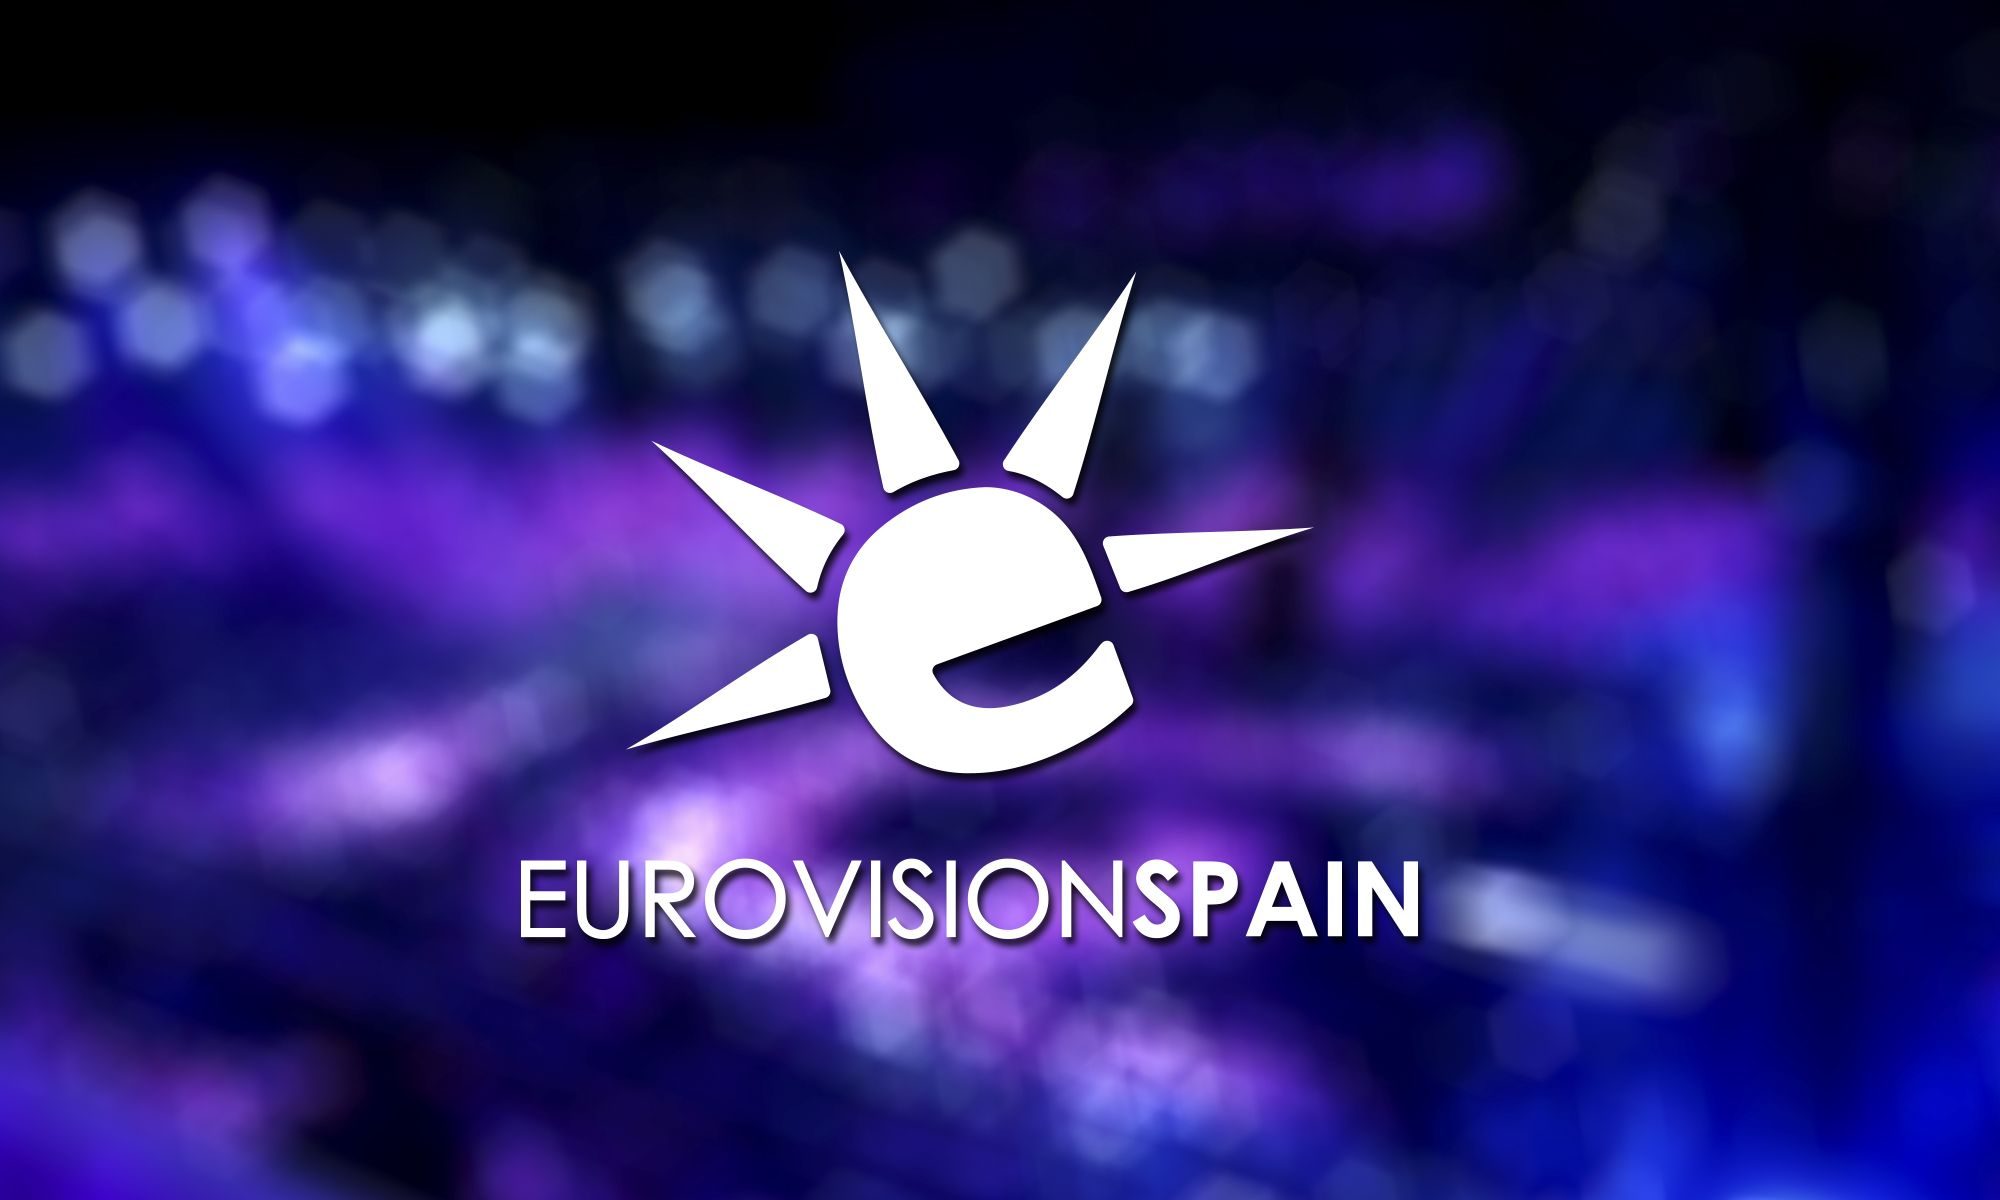 sin_ano_30122014_033432_logo_eurovisionspain_grande